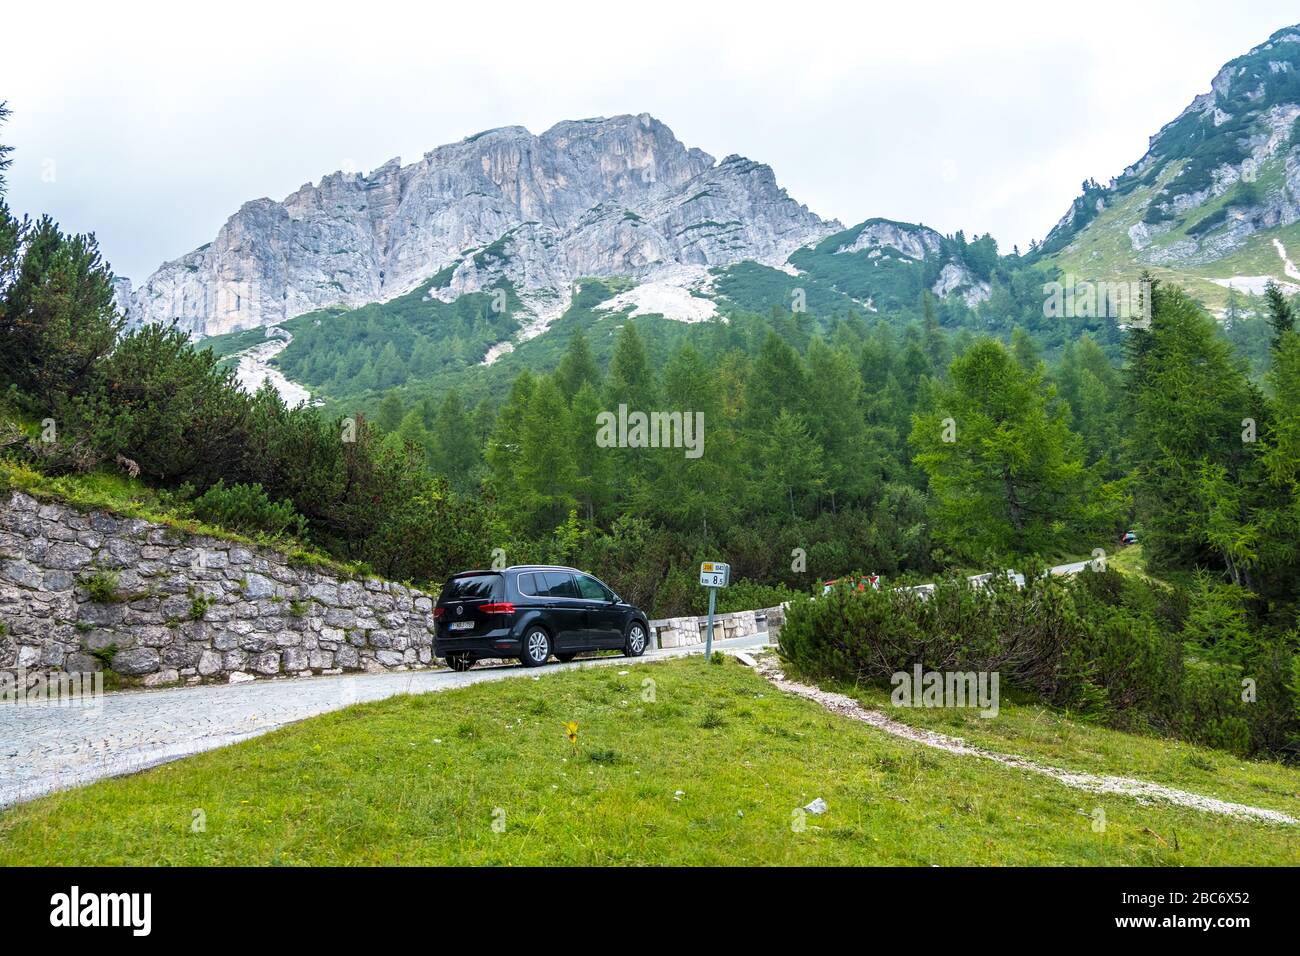 Triglav, Slovenia - August 11, 2019: Scenic view of alpine landscape and car on mountain road in Triglav national park. Julian alps, Triglav, Slovenia Stock Photo